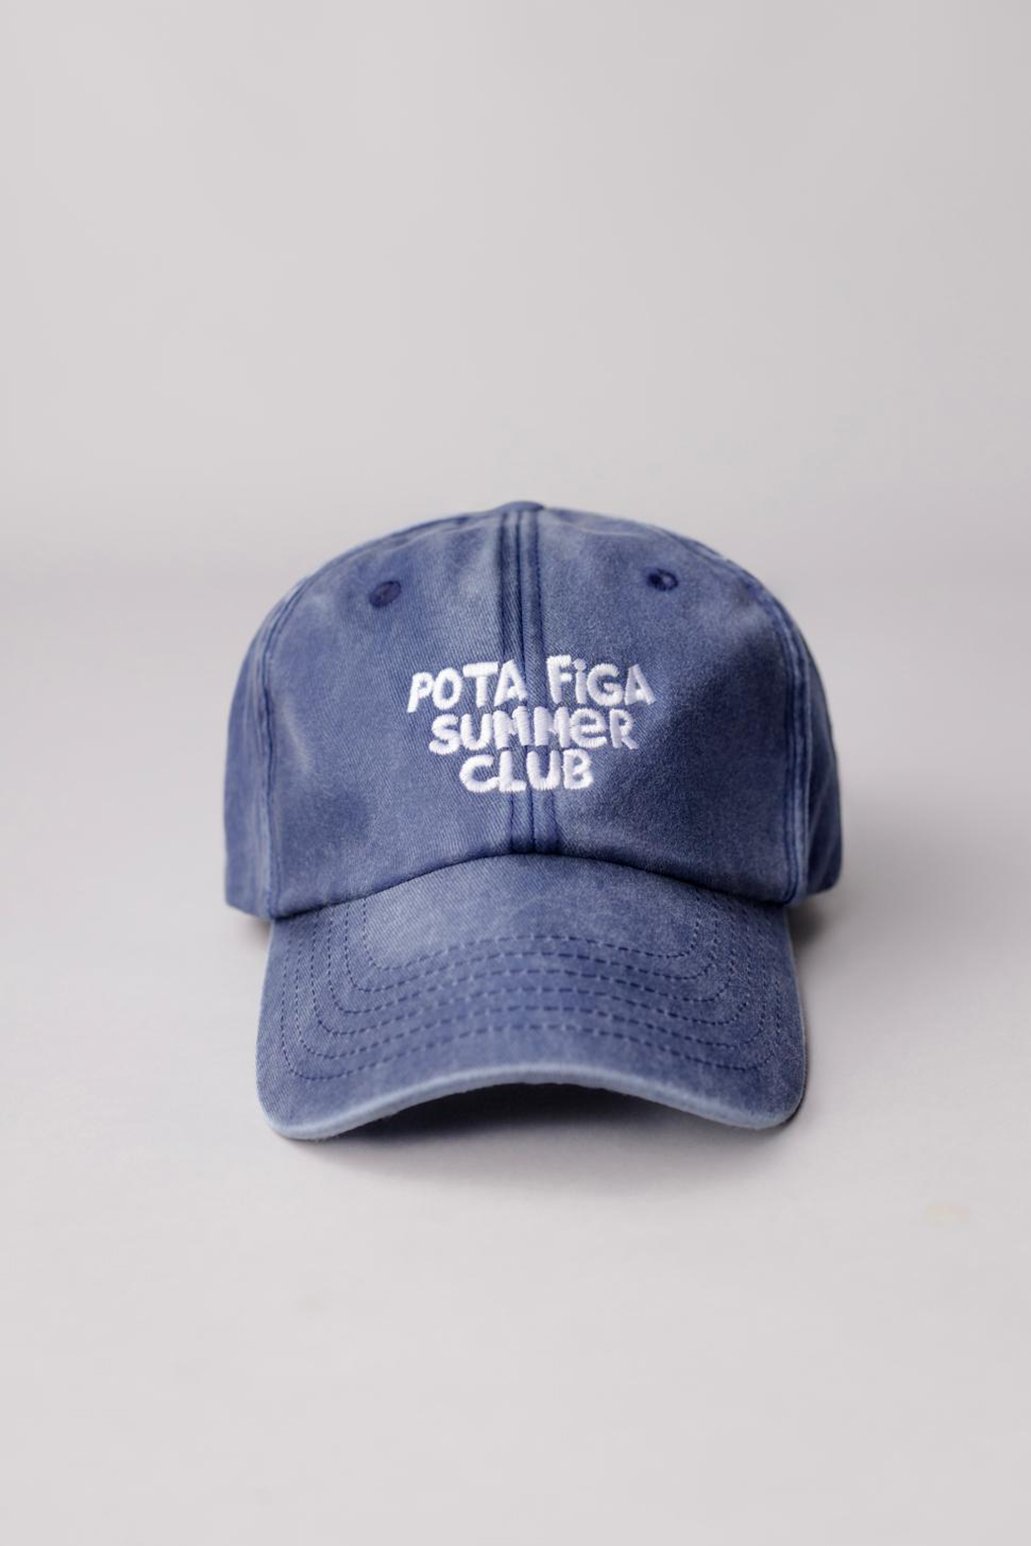 Pota F**a Summer Club – Hat